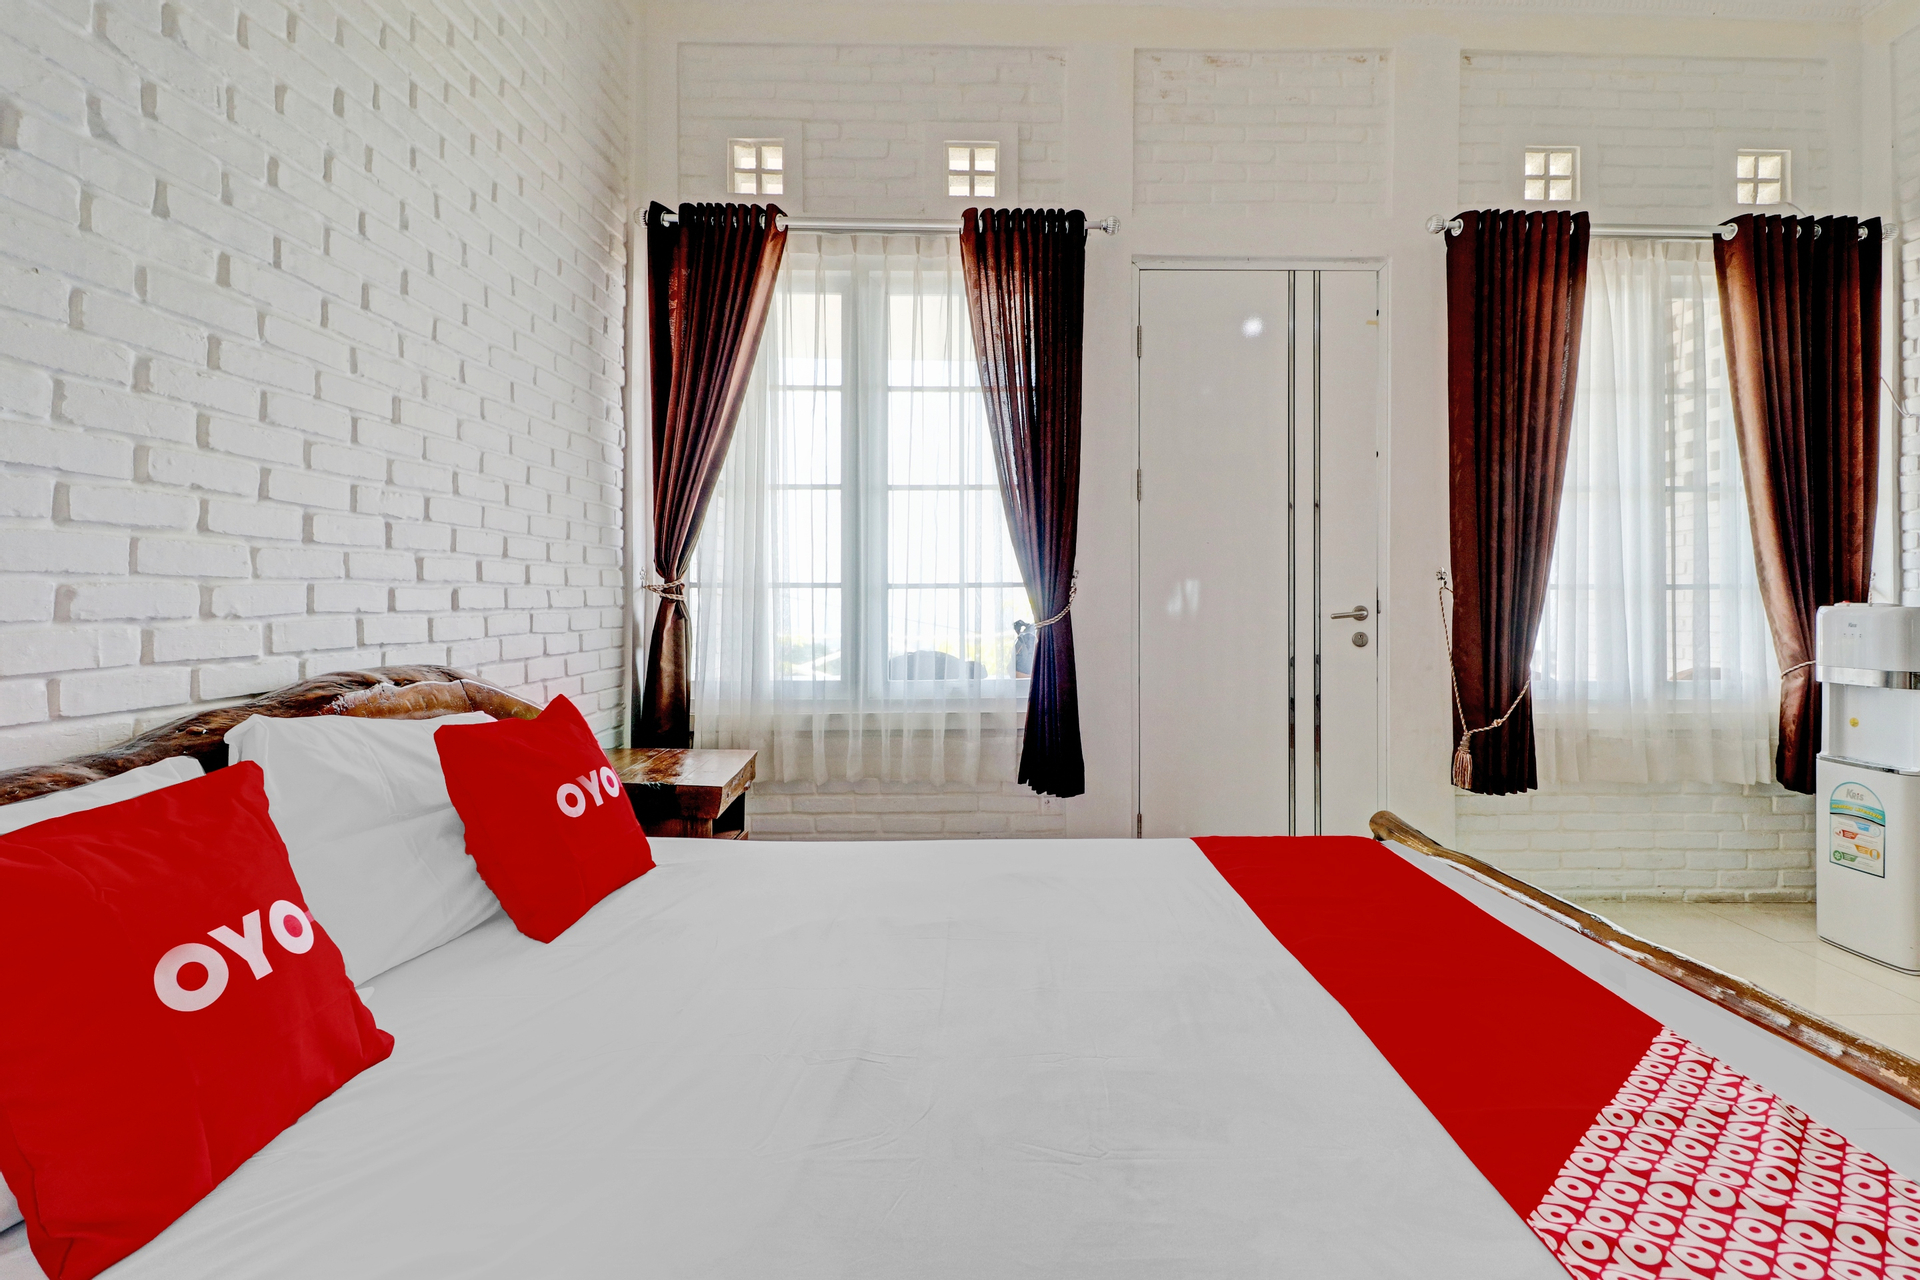 Bedroom 4, Capital O 90617 Rumah Oma Opa Syariah, Bandung